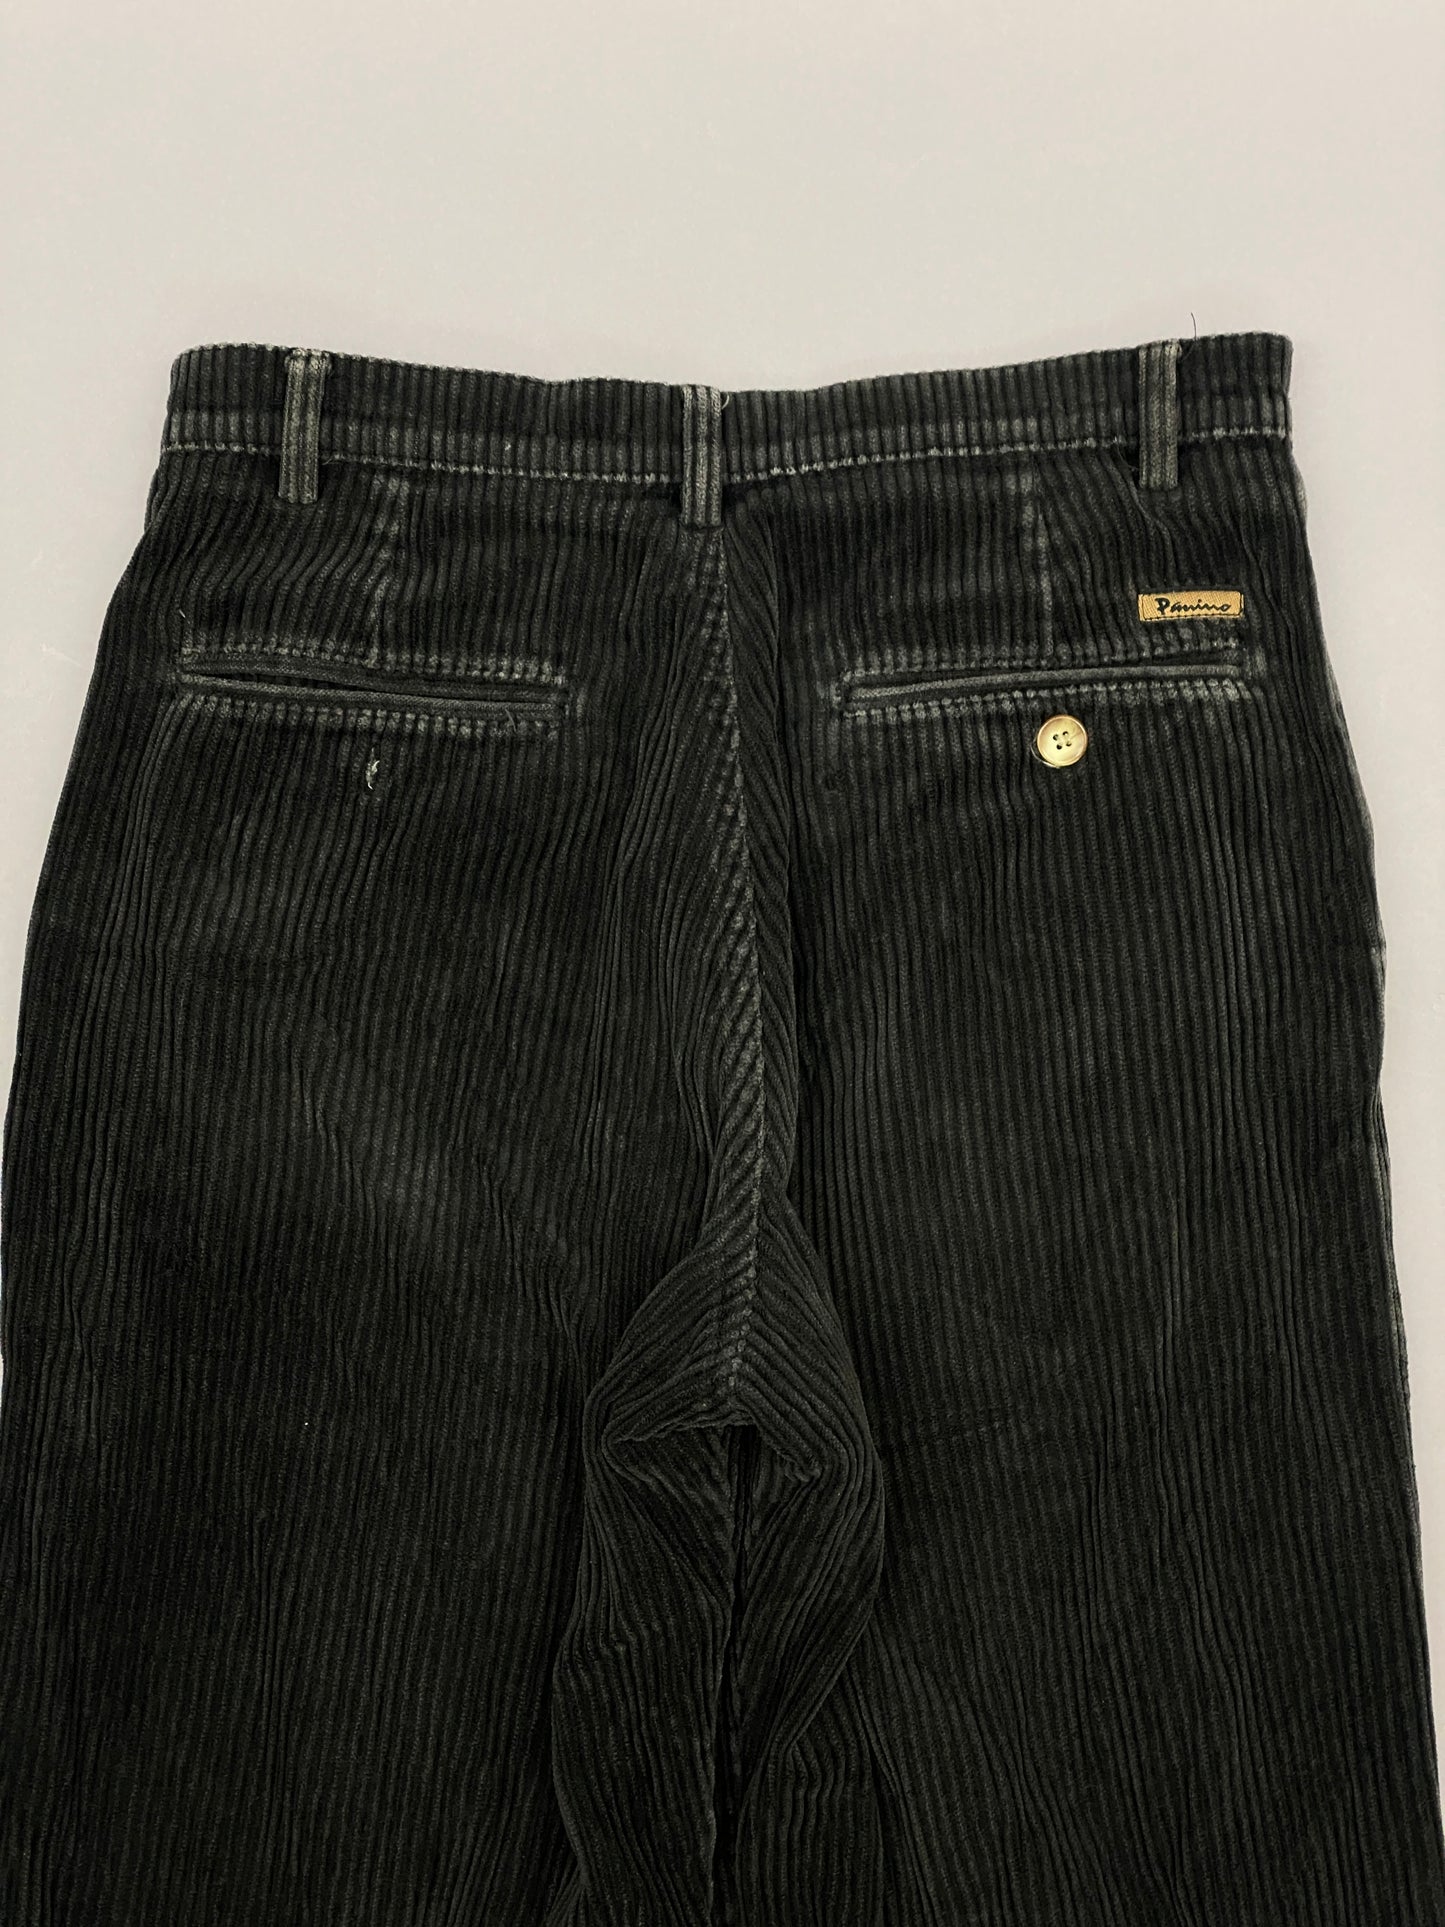 Black Panino Vintage Corduroy Pants - 28